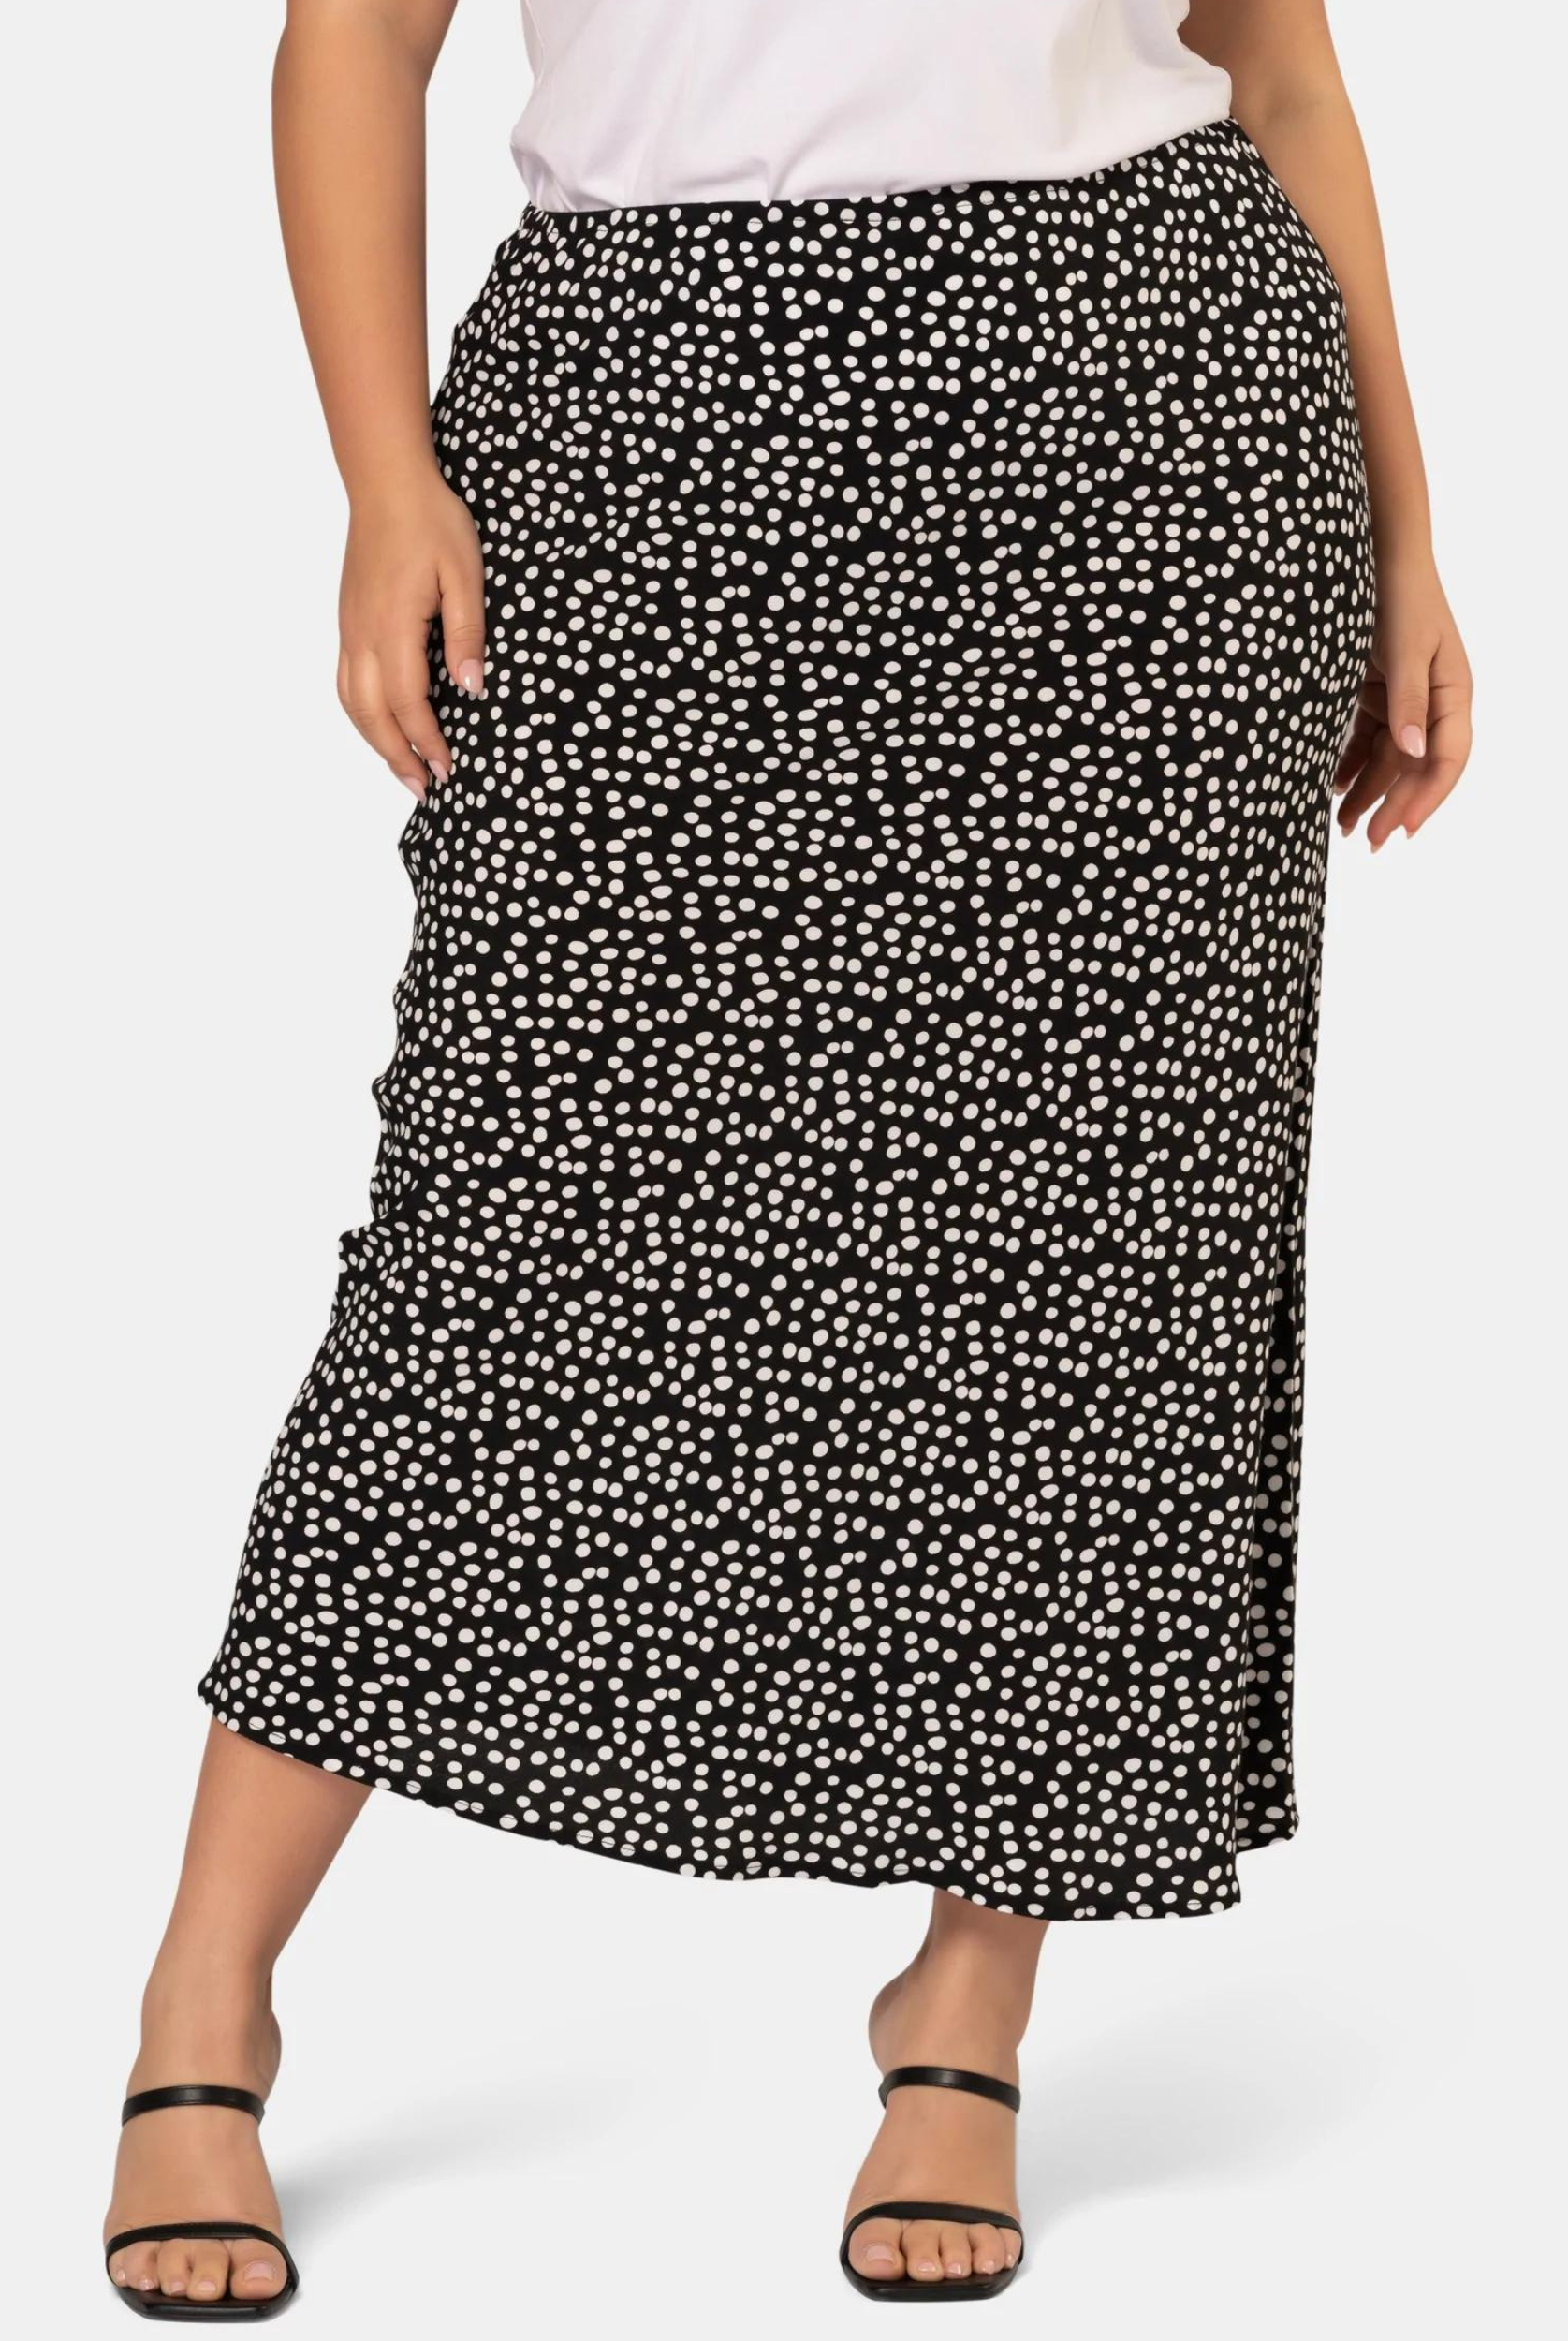 Model wearing the black and white spot print midi skirt in viscose crepe